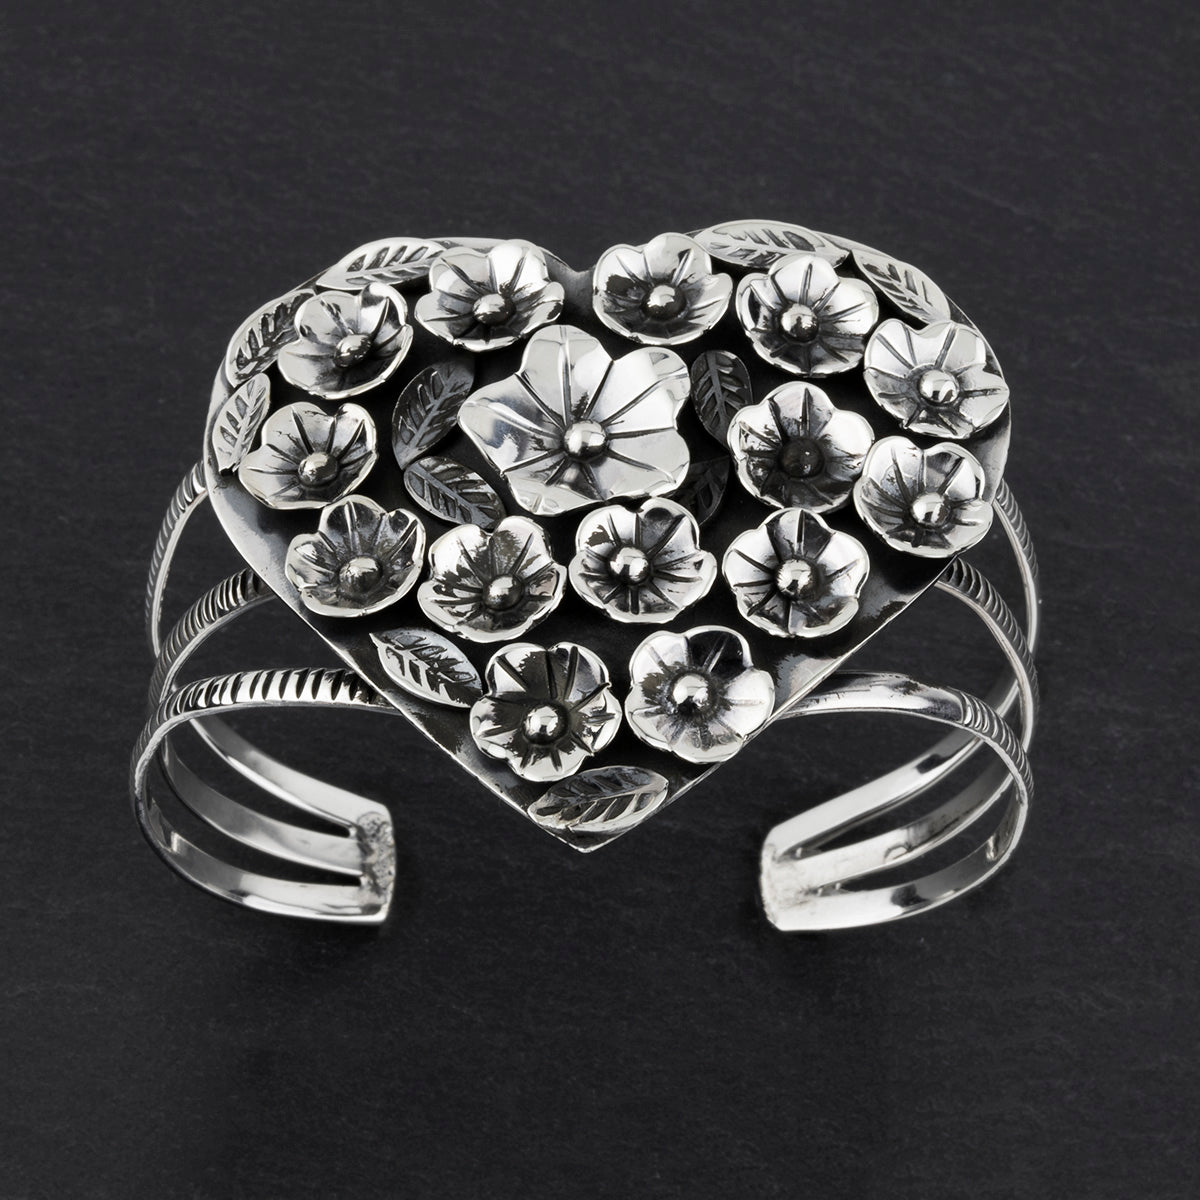 Taxco silver heart shaped floral cuff bracelet